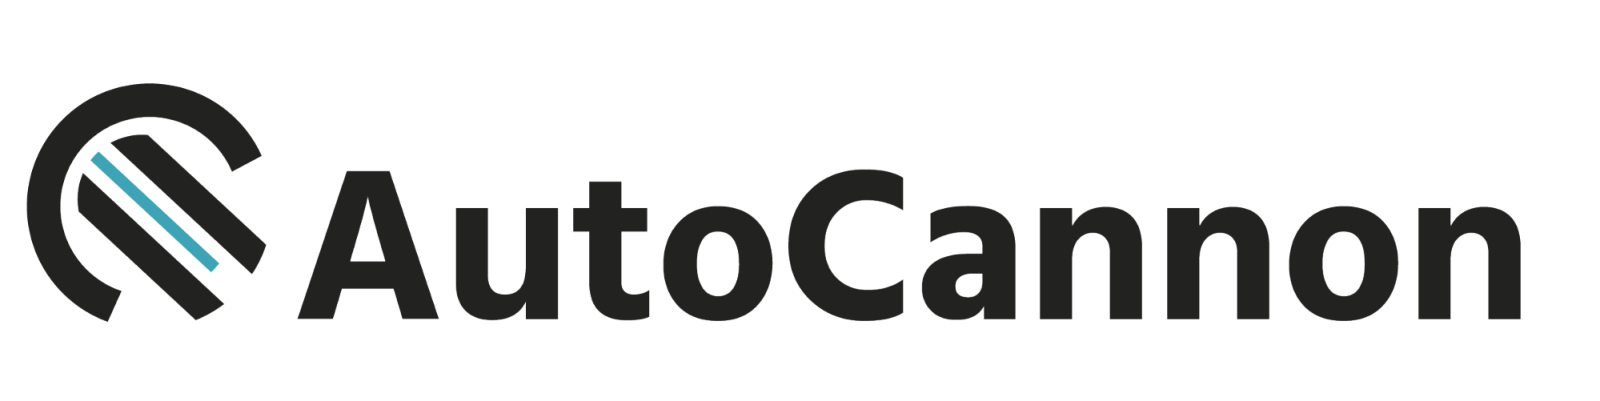 autocannon logo: a node.js benchmarking tool